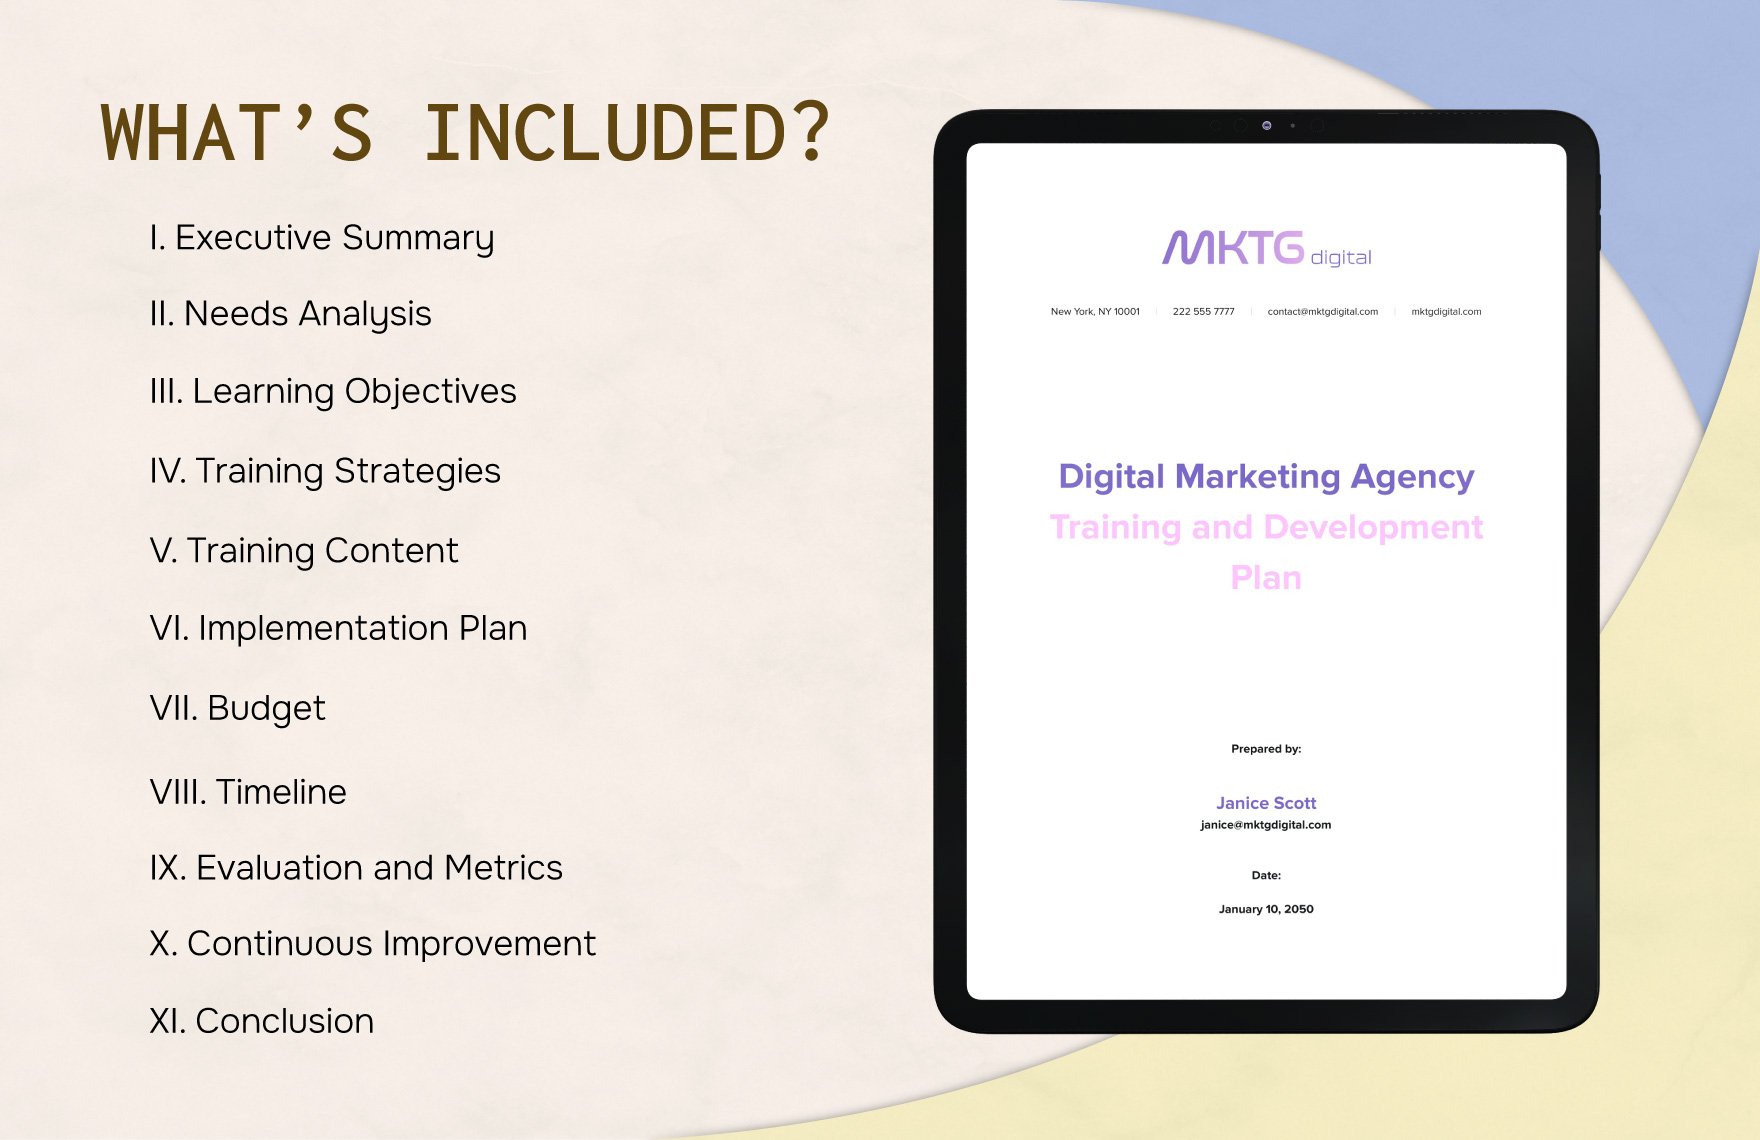 Digital Marketing Agency Training and Development Plan Template